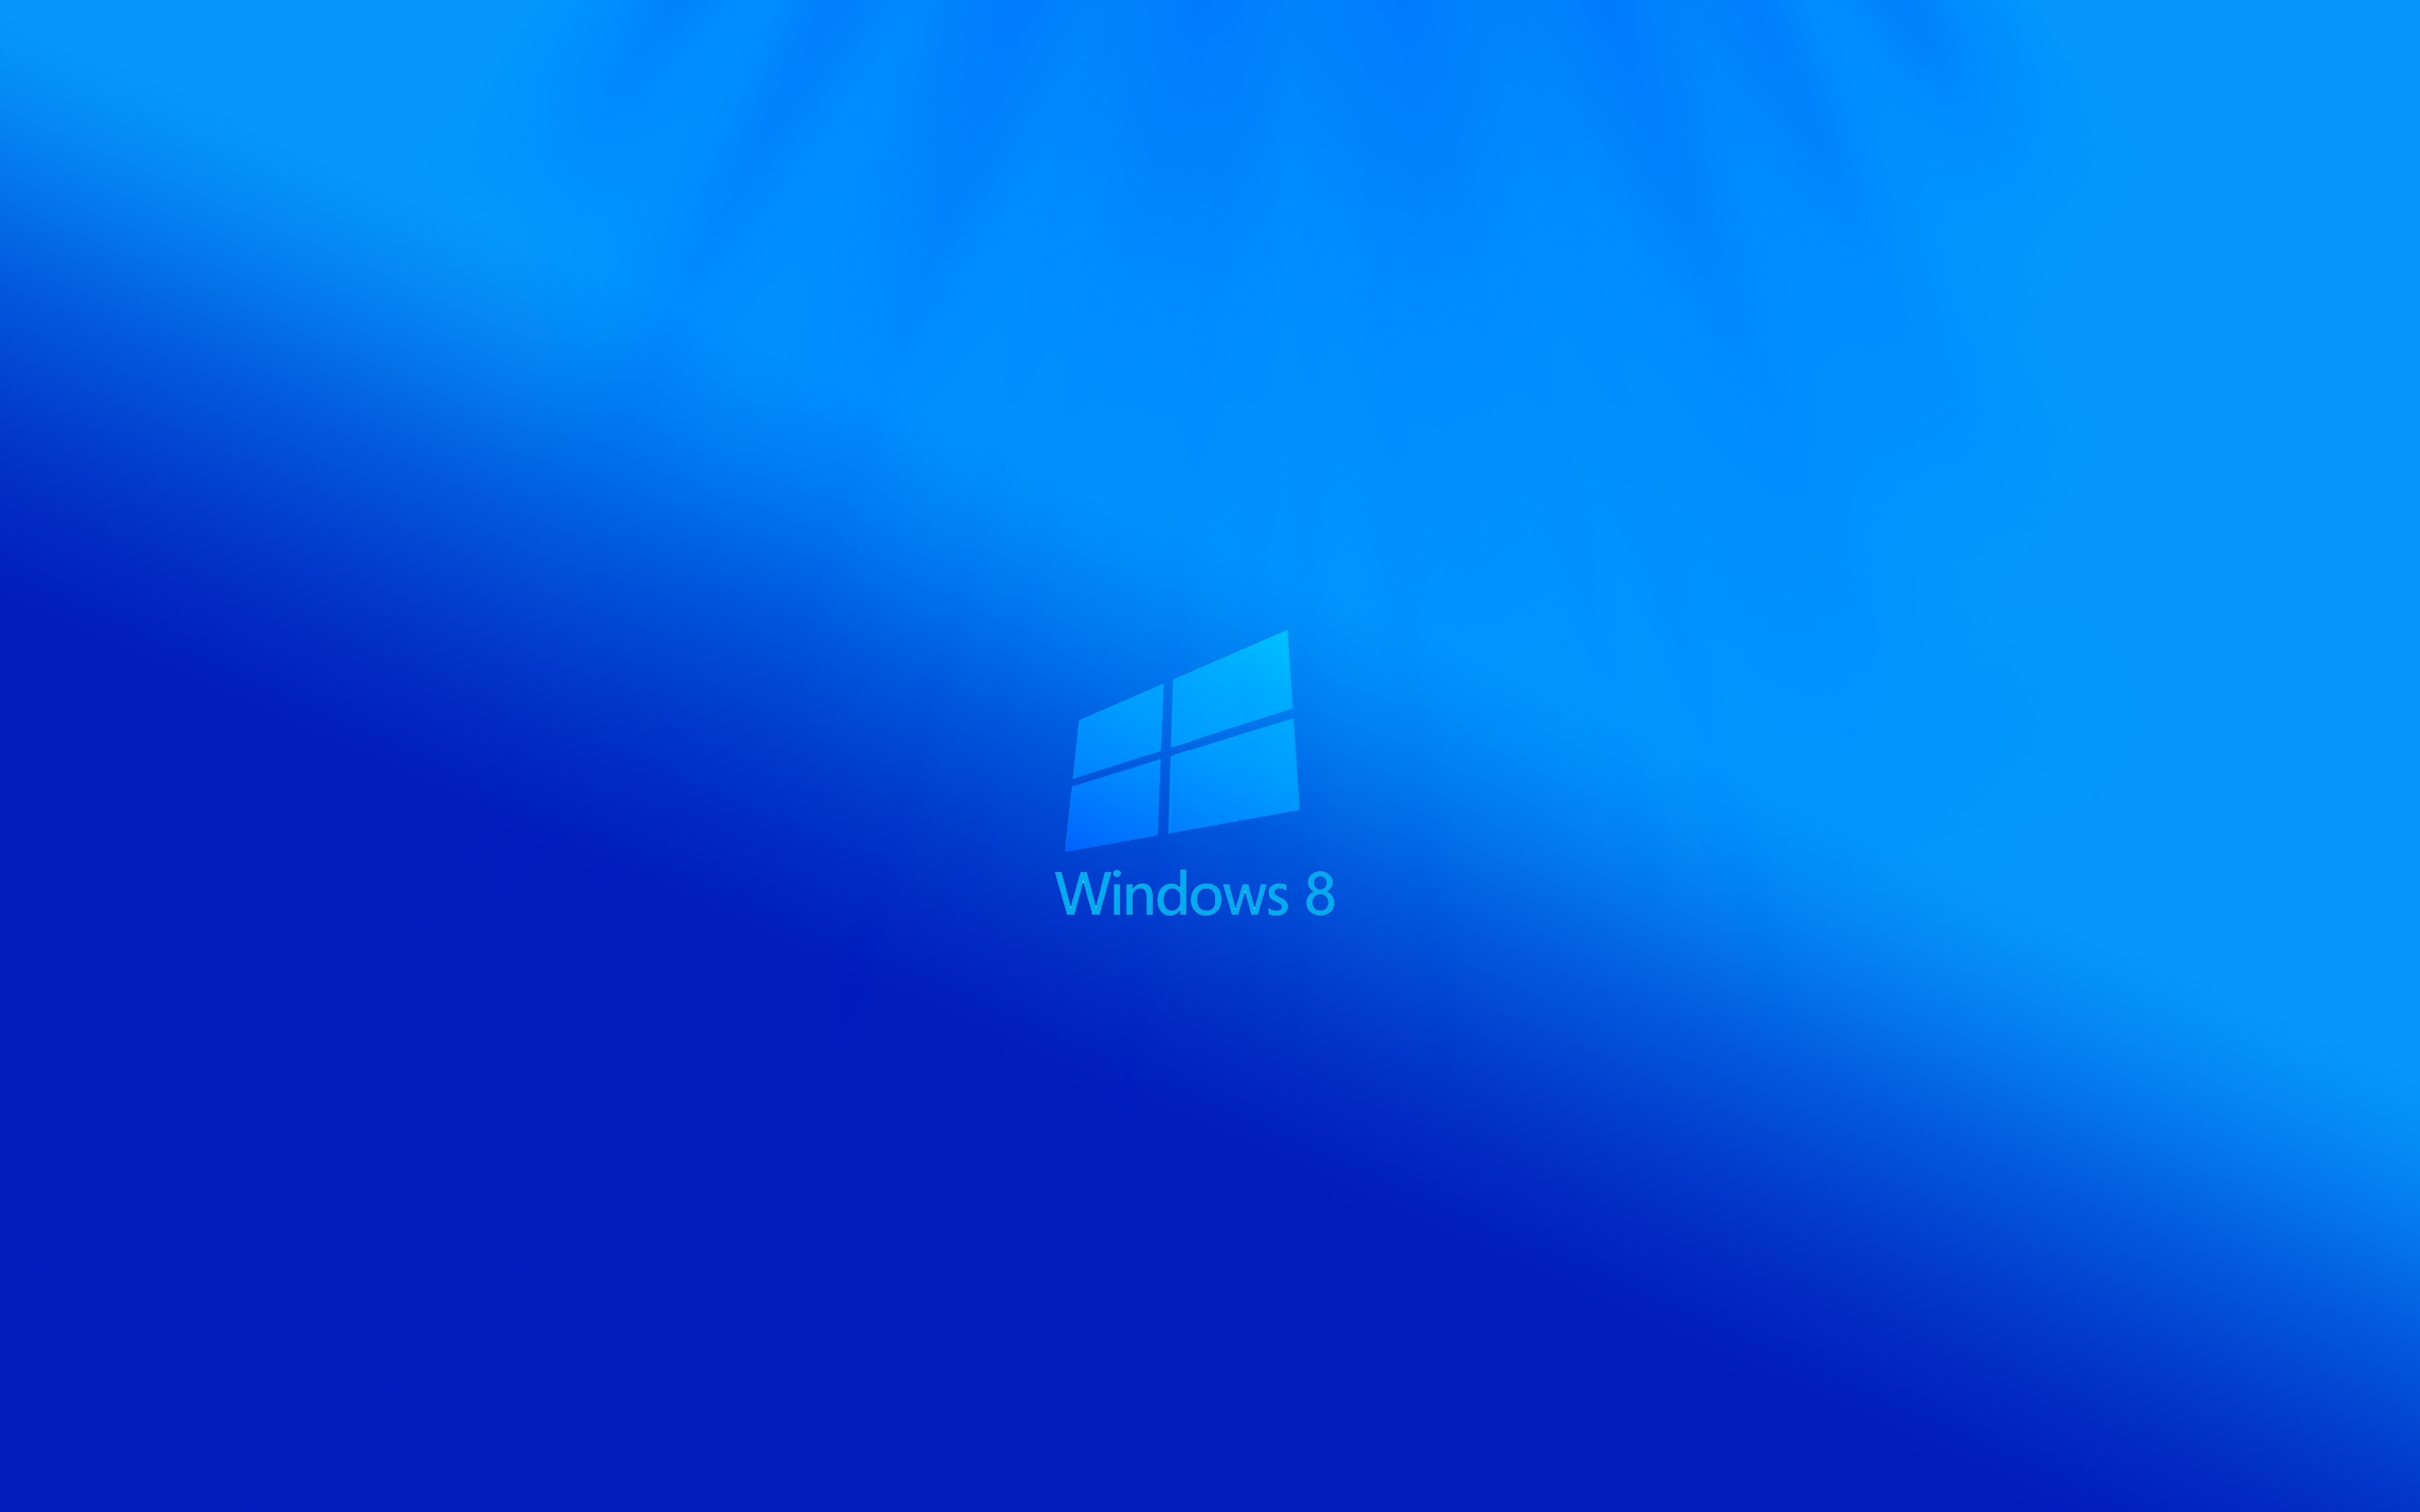 Windows 8 Light for 2880 x 1800 Retina Display resolution